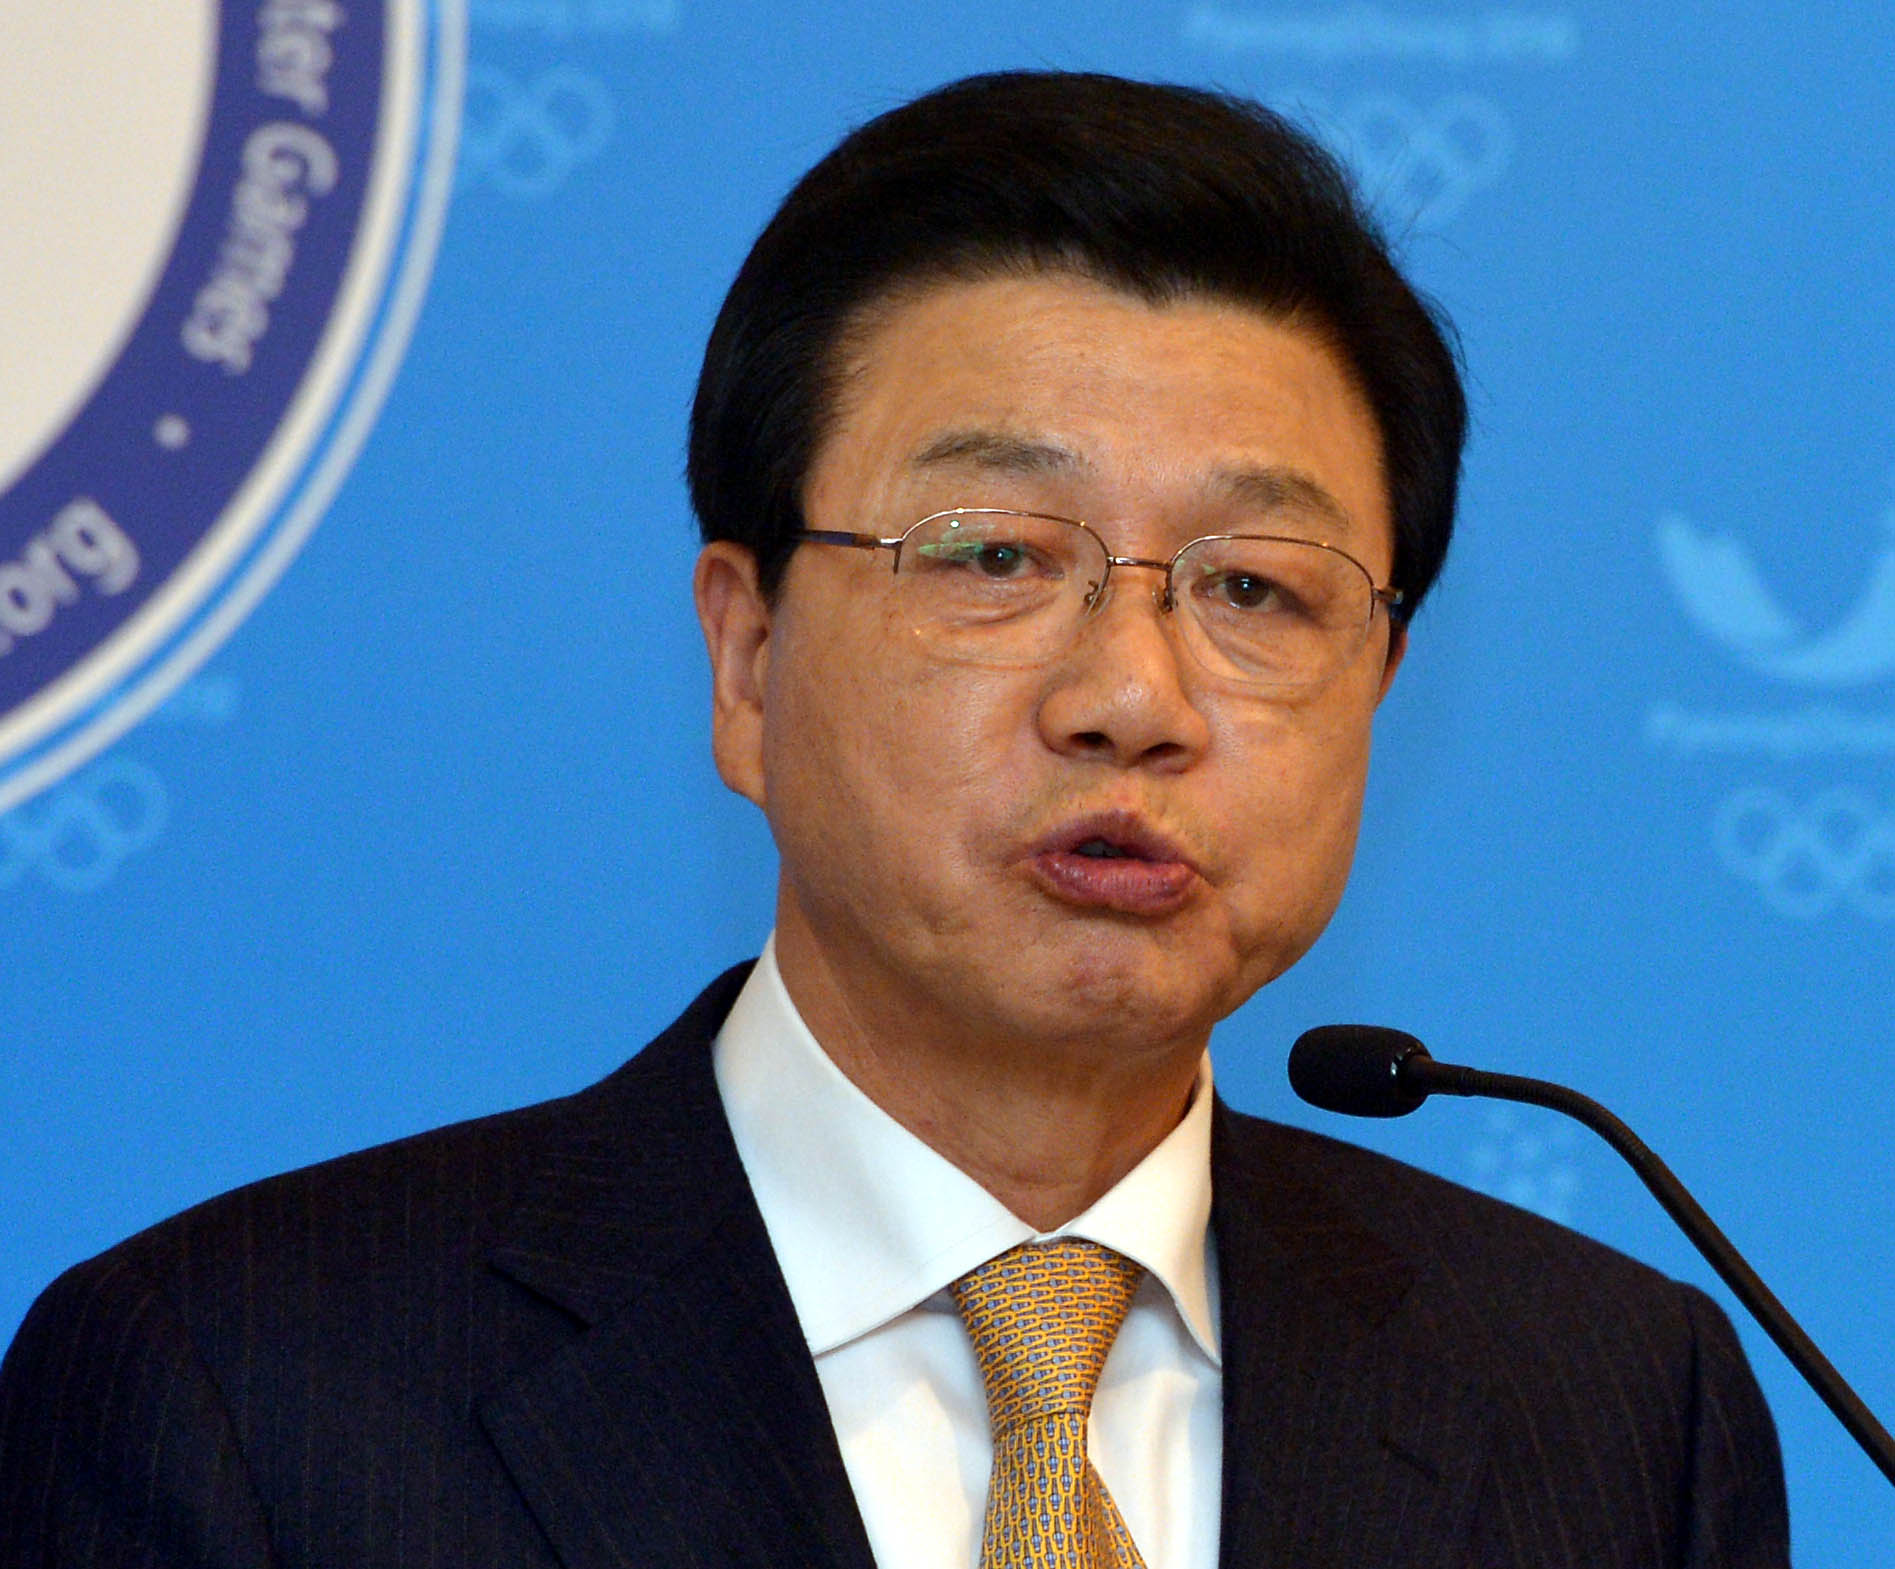 Pyeongchang 2018 President Kim Seoul January 29 2013